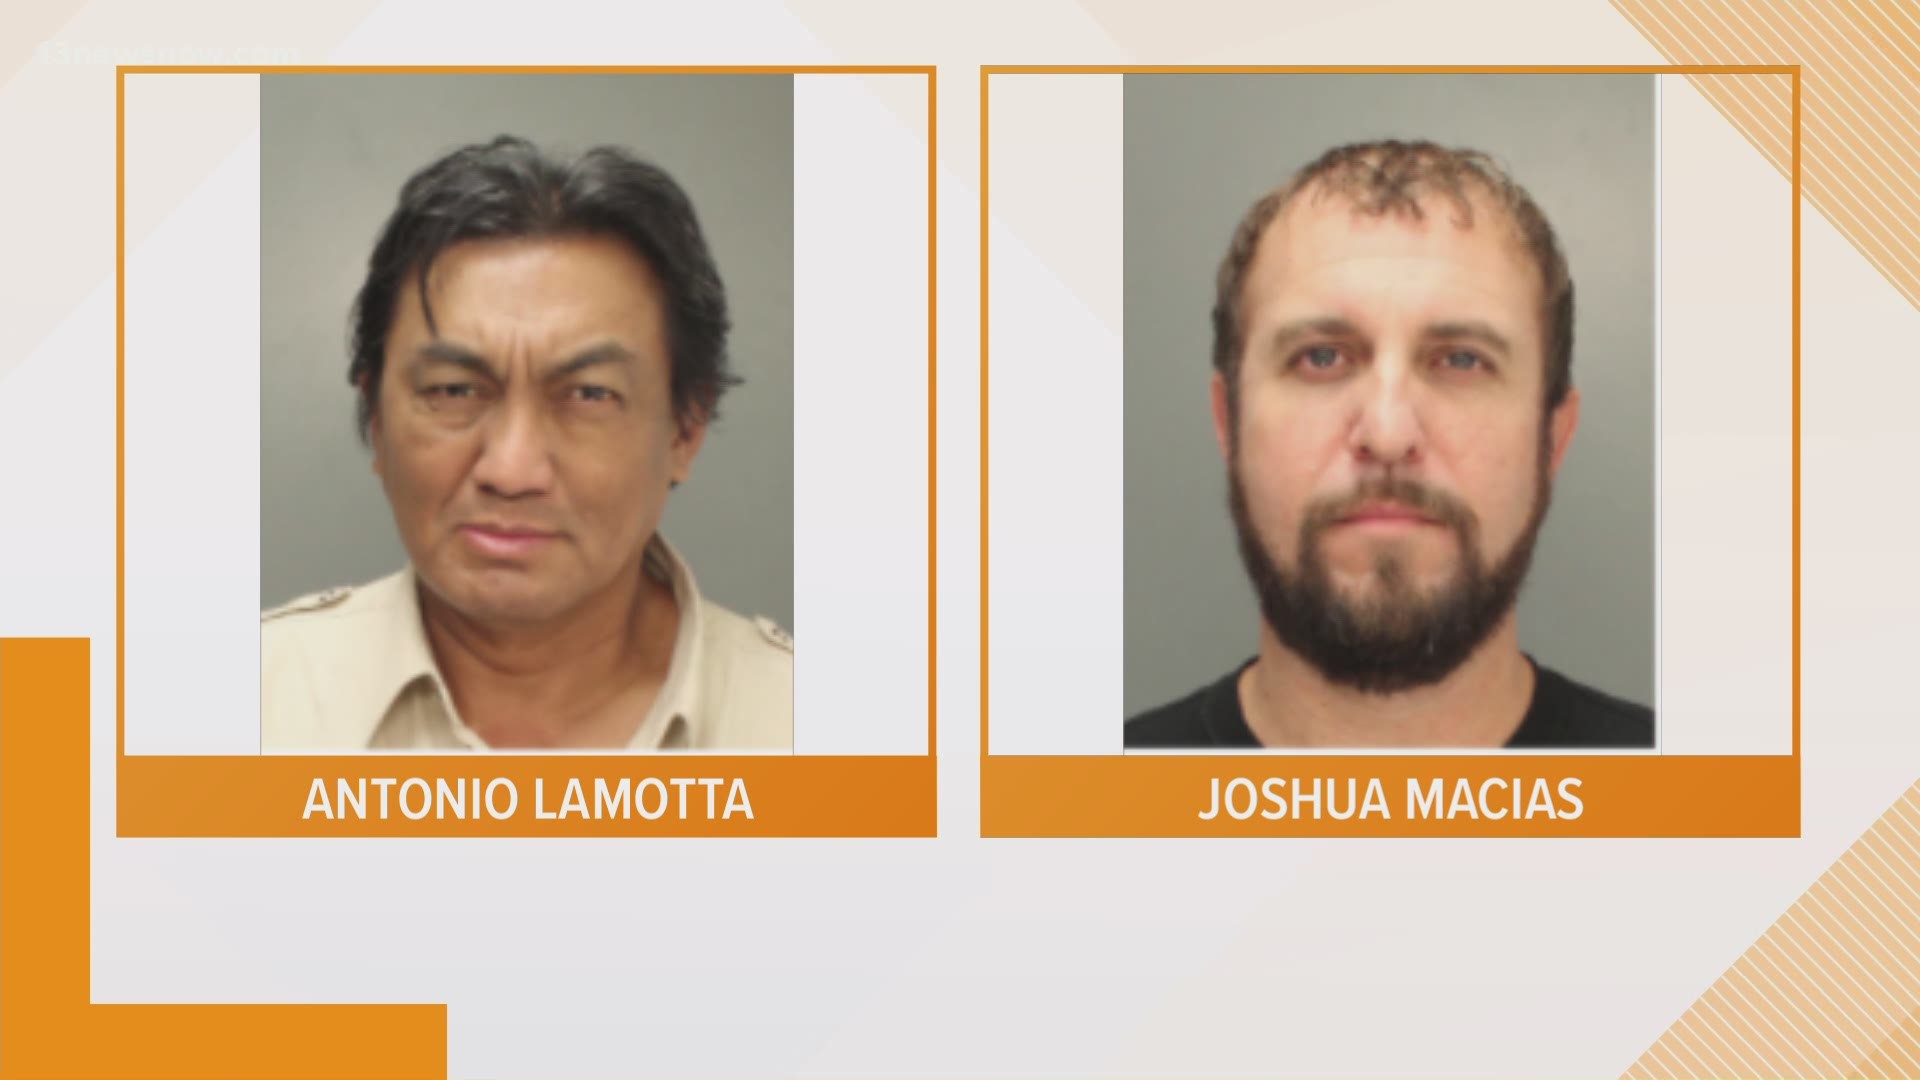 Antonio Lamotta and Joshua Macias were arrested in Philadelphia back in November.